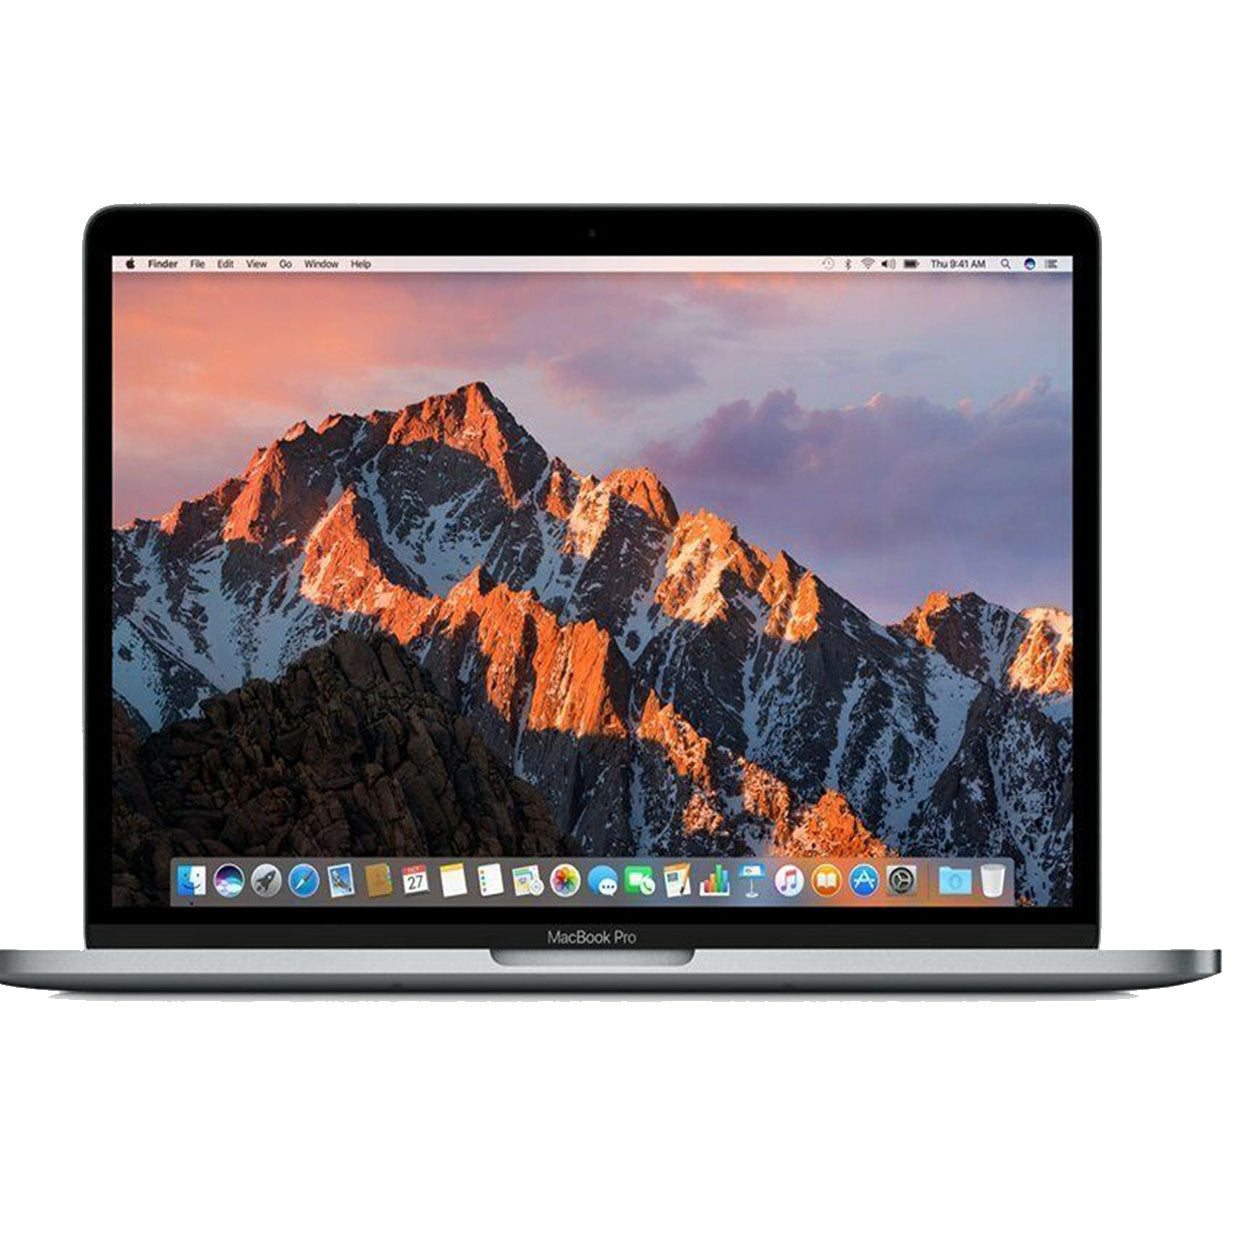 Apple MacBook Pro 2017| A1708 MPXQ2/LLA |Corei5 |8GB RAM |128GB SSD